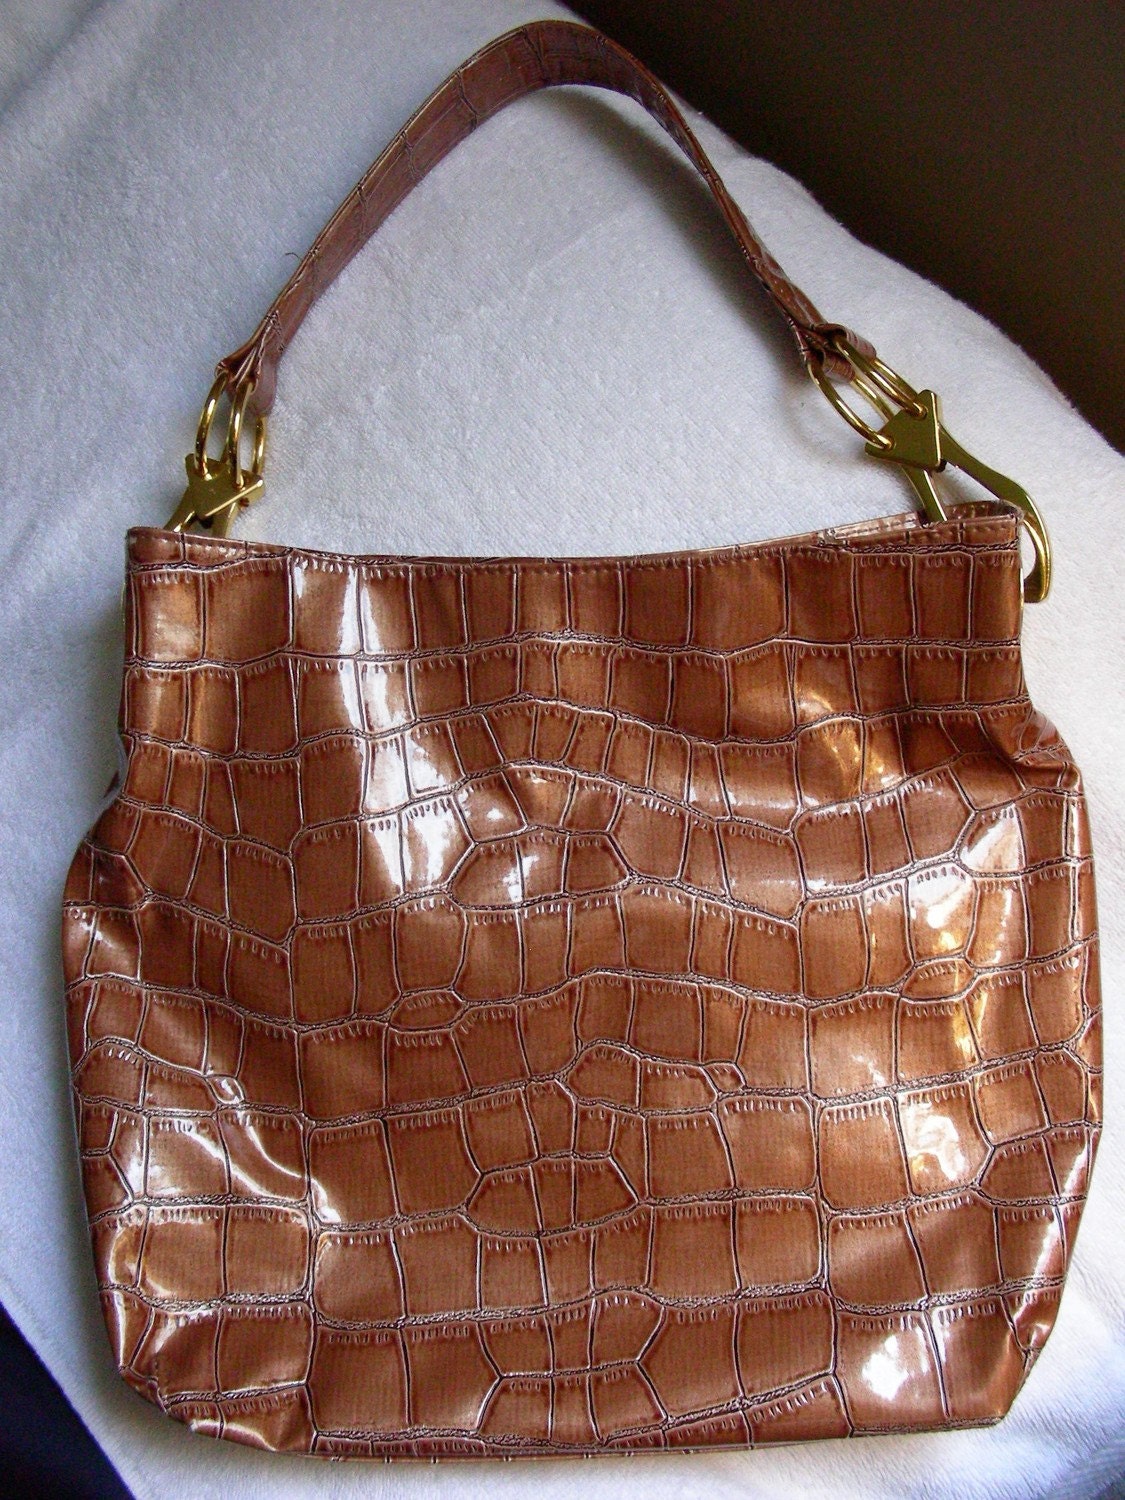 Lovely bronze faux croc patent leather handbag by designer